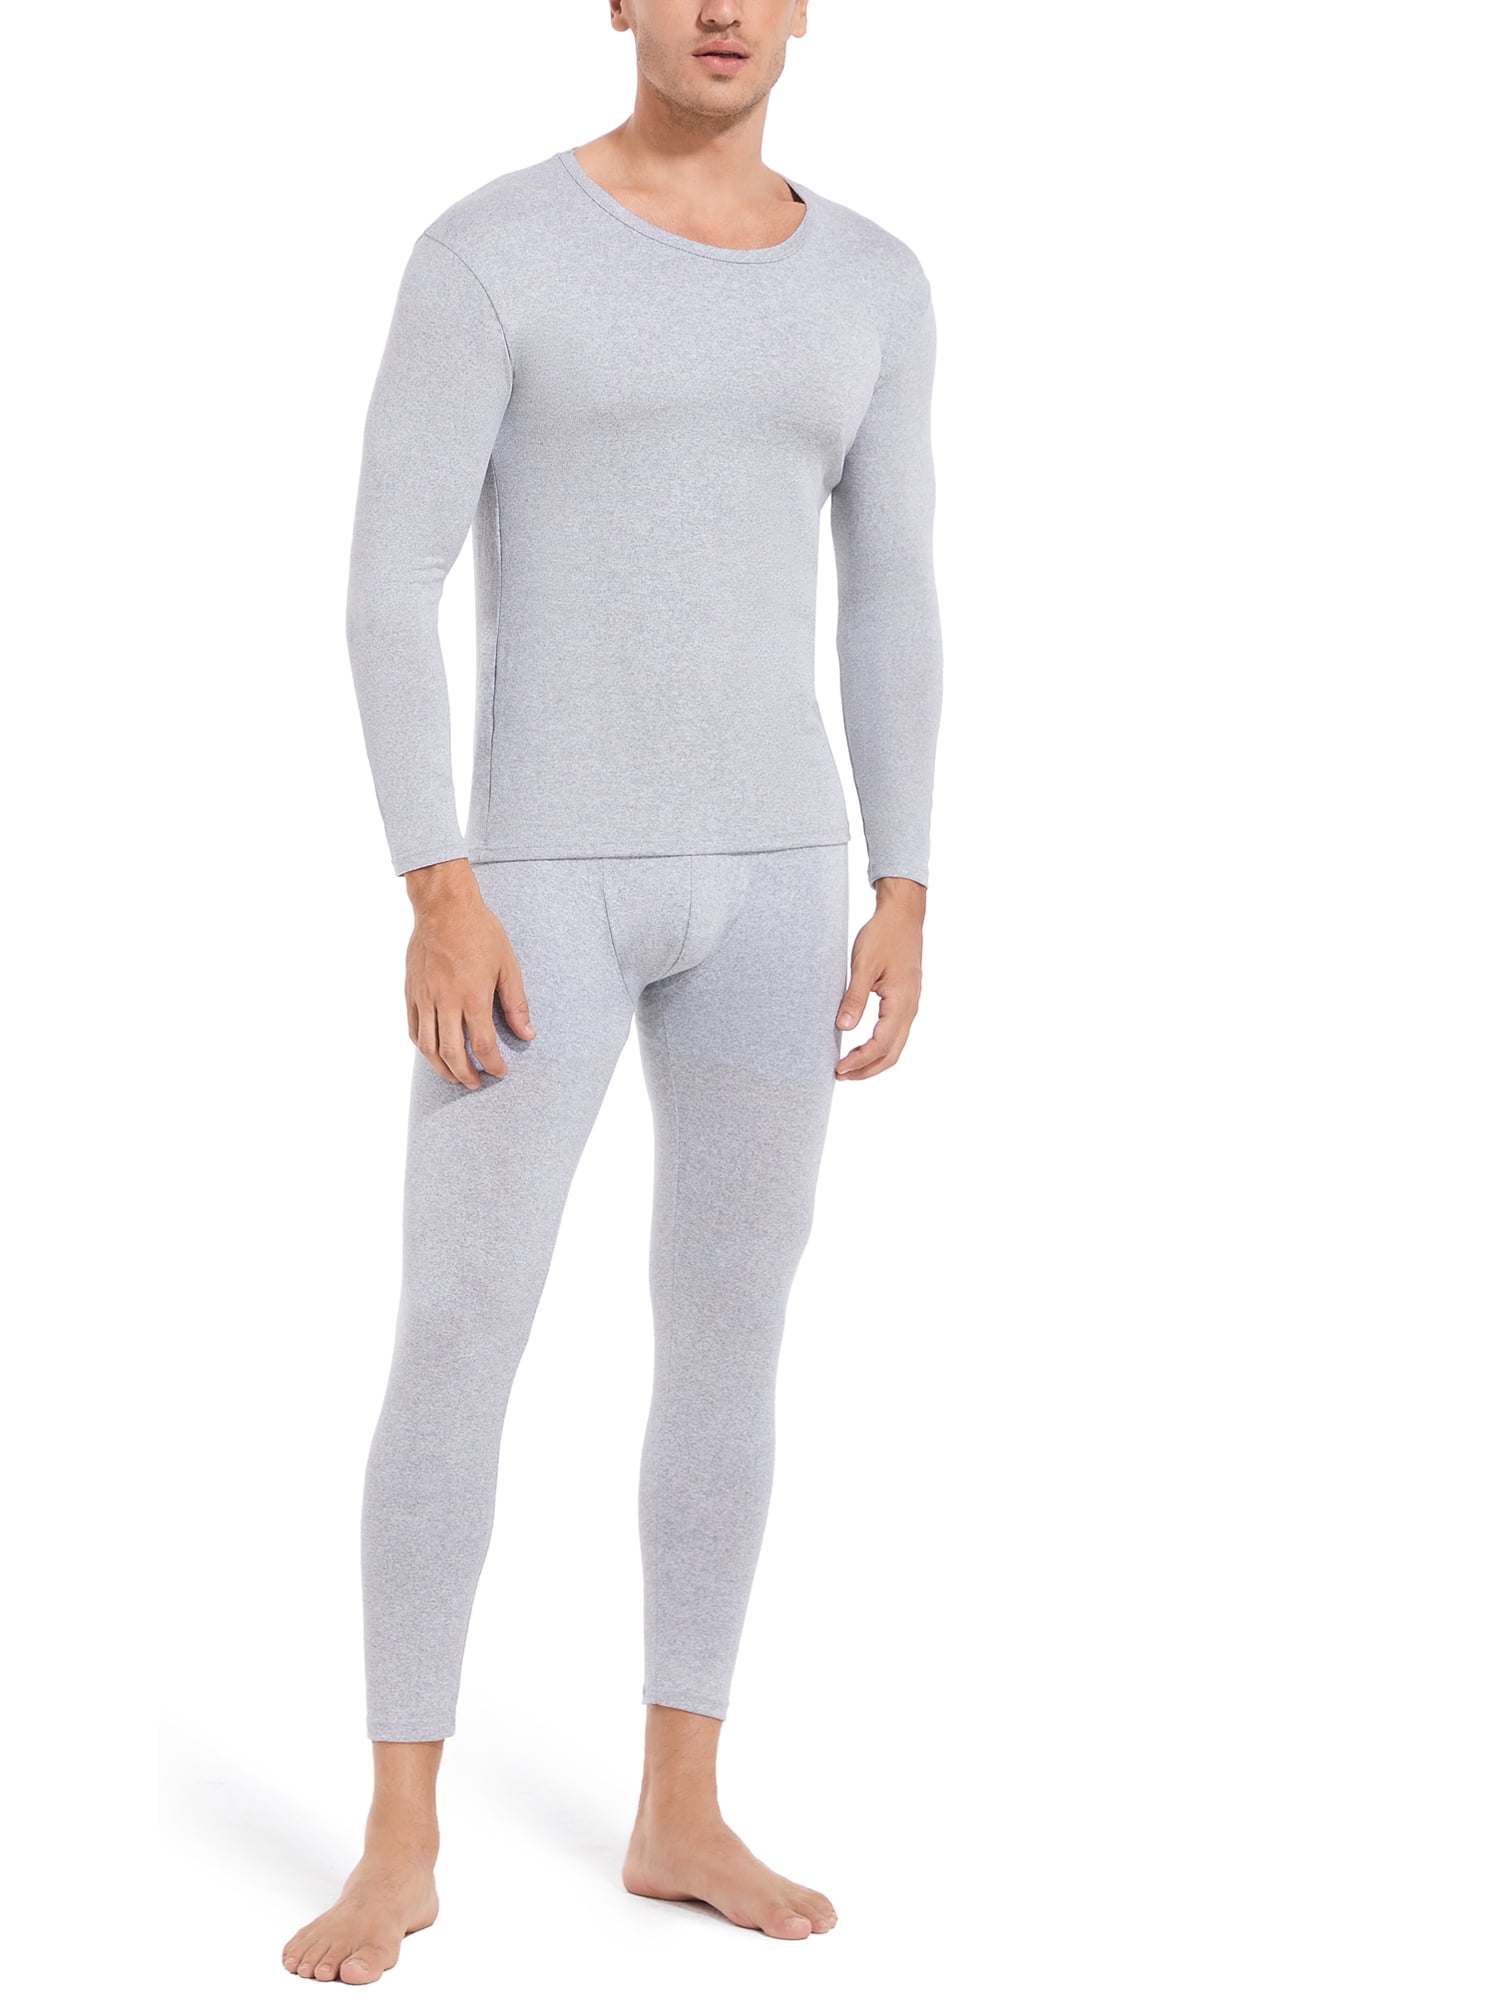 COMFREE Thermal Underwear for Men, Ultra Soft Long Johns Set Fleece ...